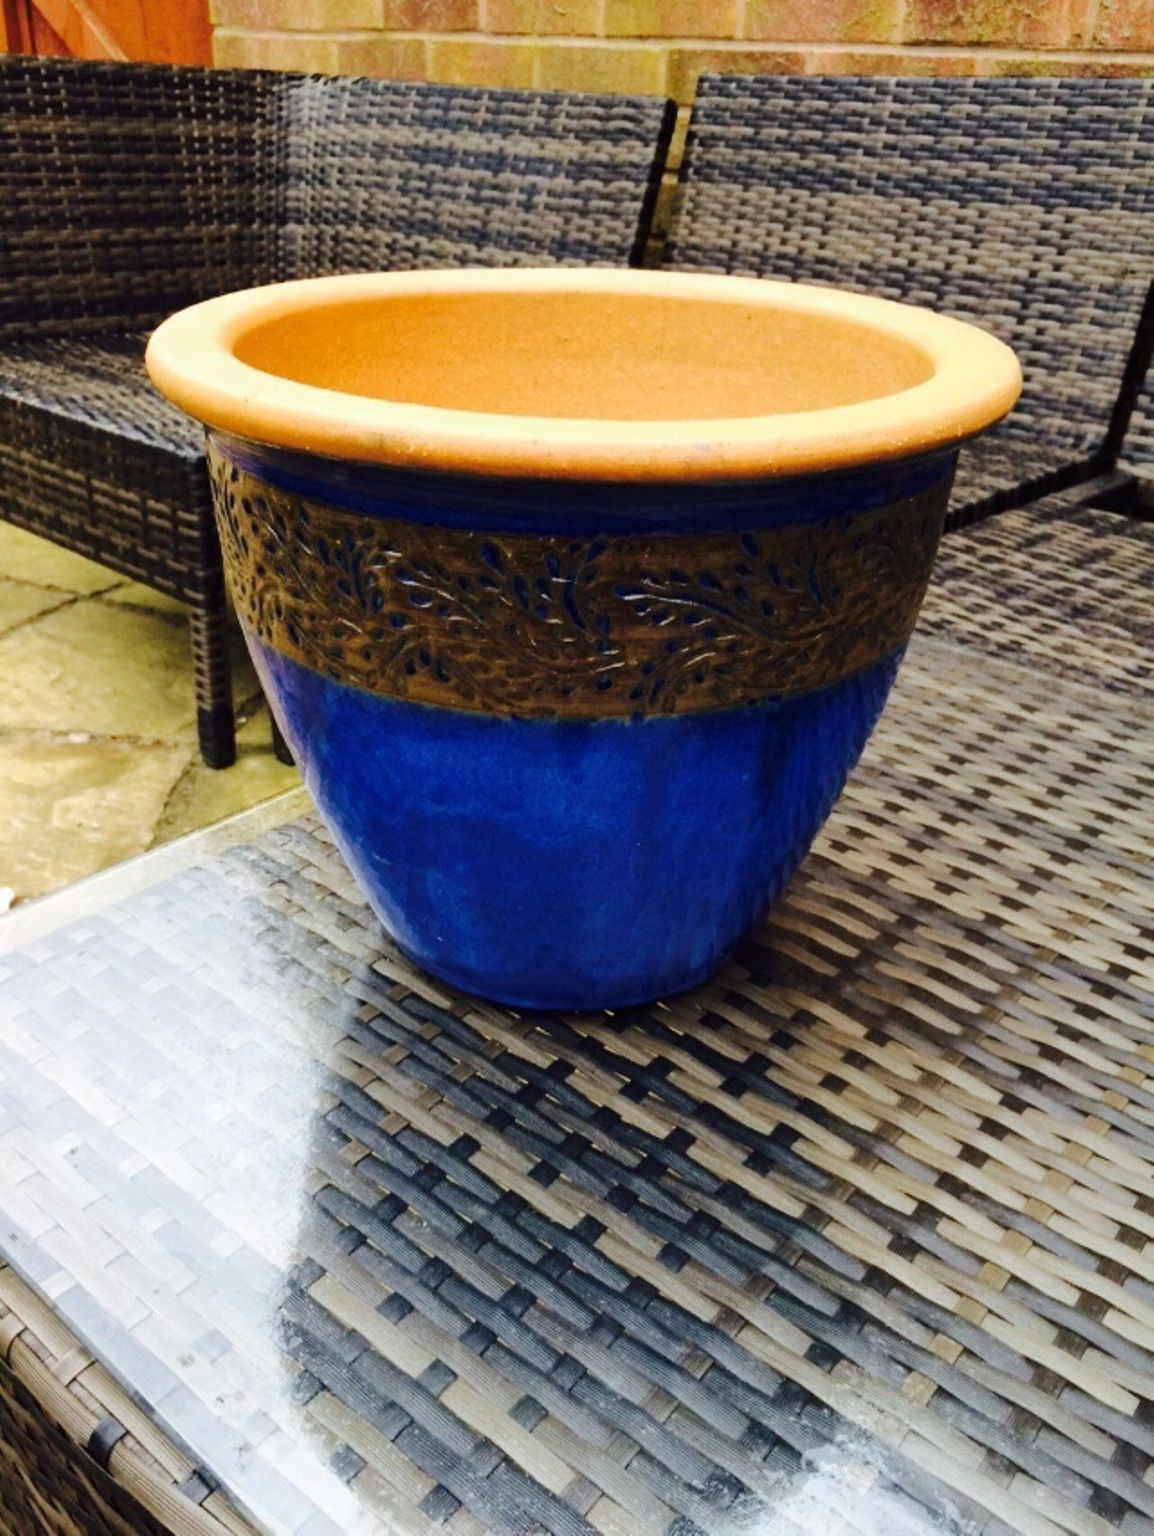 13 Recommended Abingdon Usa Pottery Vase 2024 free download abingdon usa pottery vase of https en shpock com i wpenbmd2rypezasr 2017 09 06t190859 intended for blue planter 50bdd610